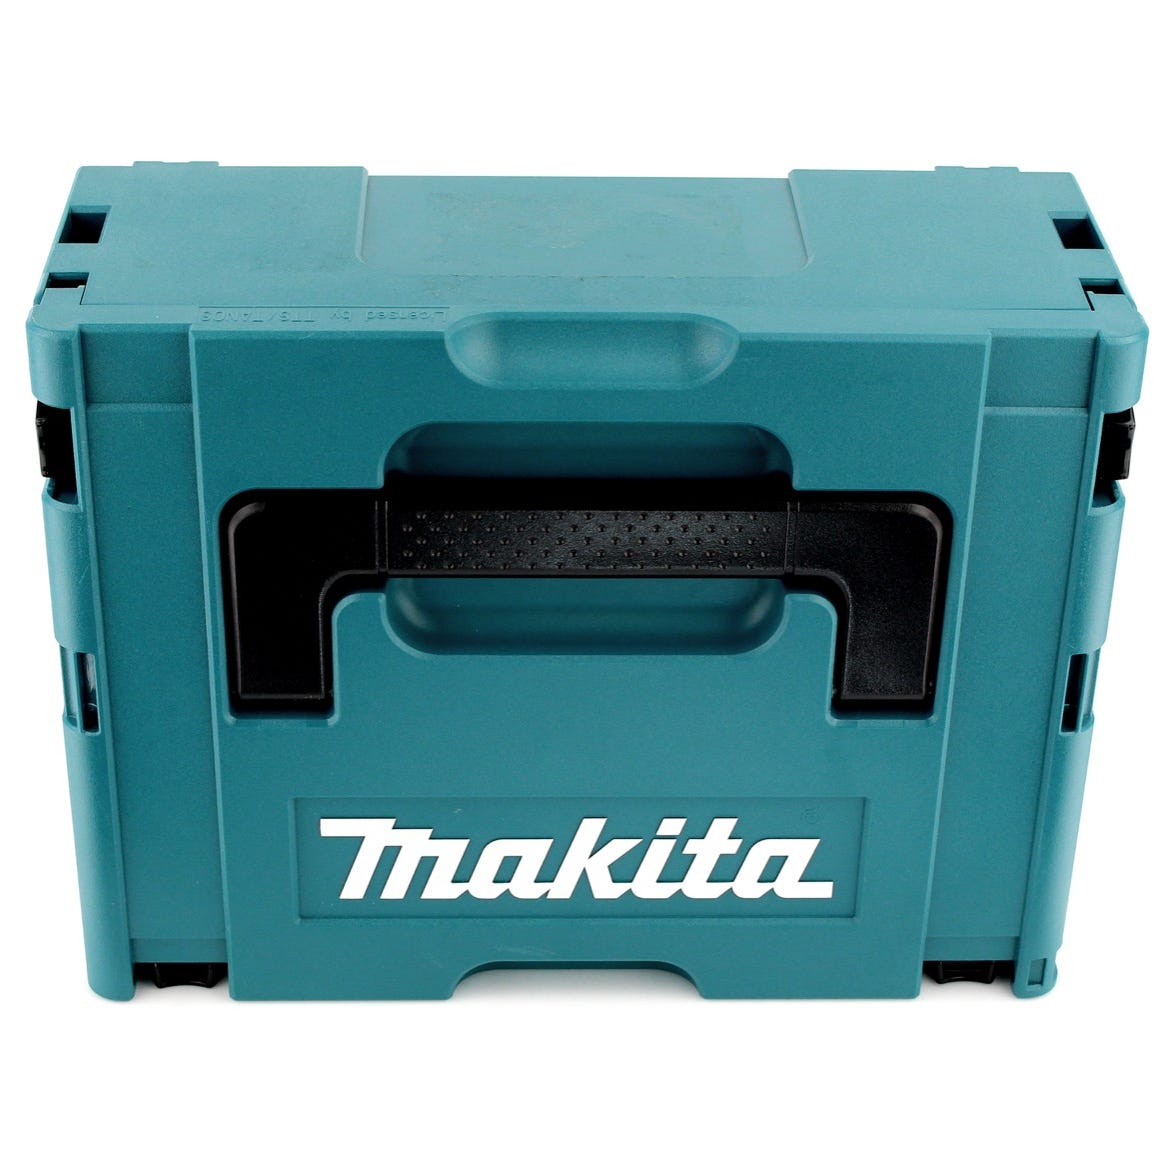 Makita DJV 182 F1J Scie sauteuse sans fil 18V Brushless 26mm + Coffret de transport Makpac + 1x Batterie BL1830 3,0 Ah - sans 2